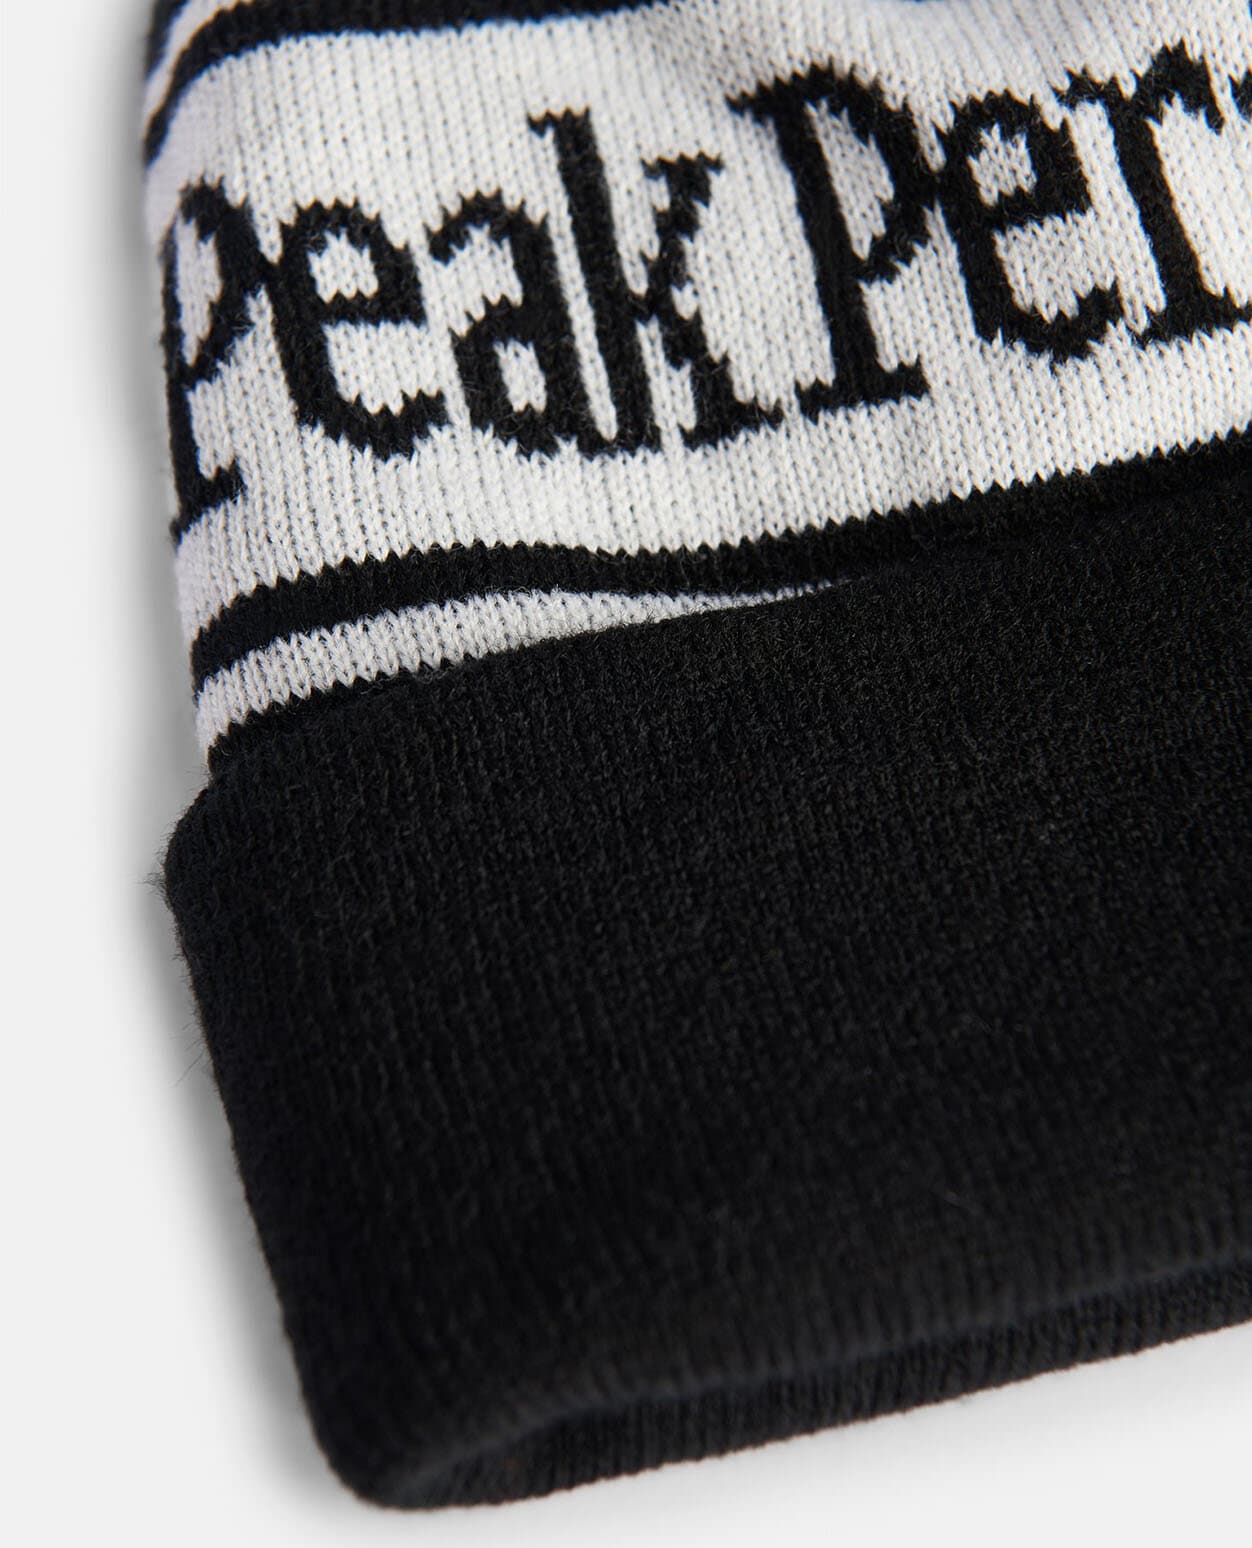 Peak Performance Pow Hat Black